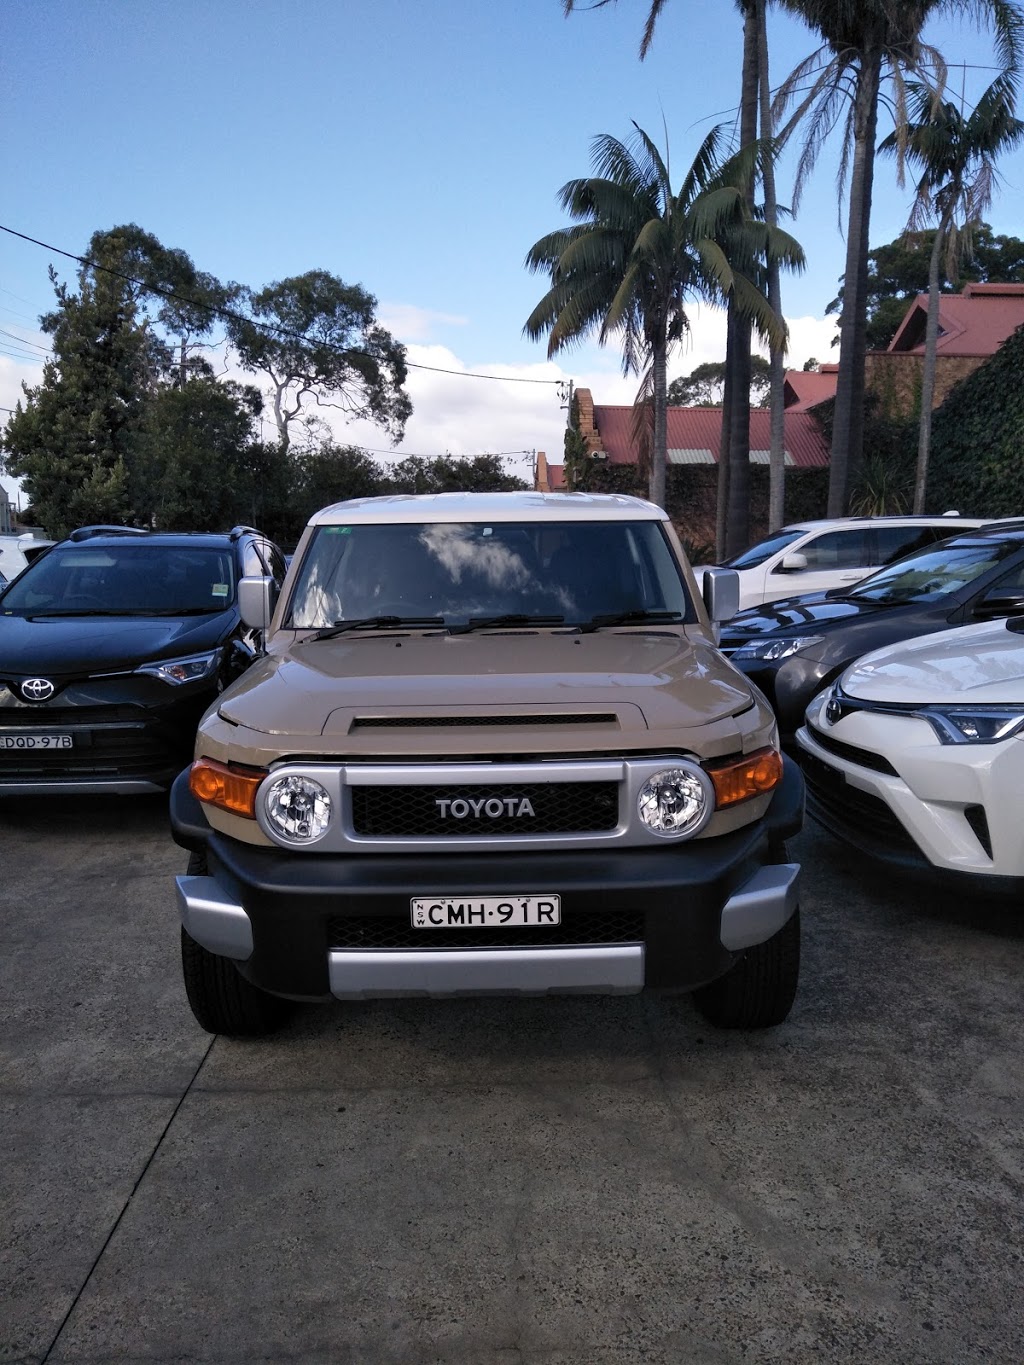 Mosman Toyota | car dealer | 501 Military Rd, Mosman NSW 2088, Australia | 0299692555 OR +61 2 9969 2555